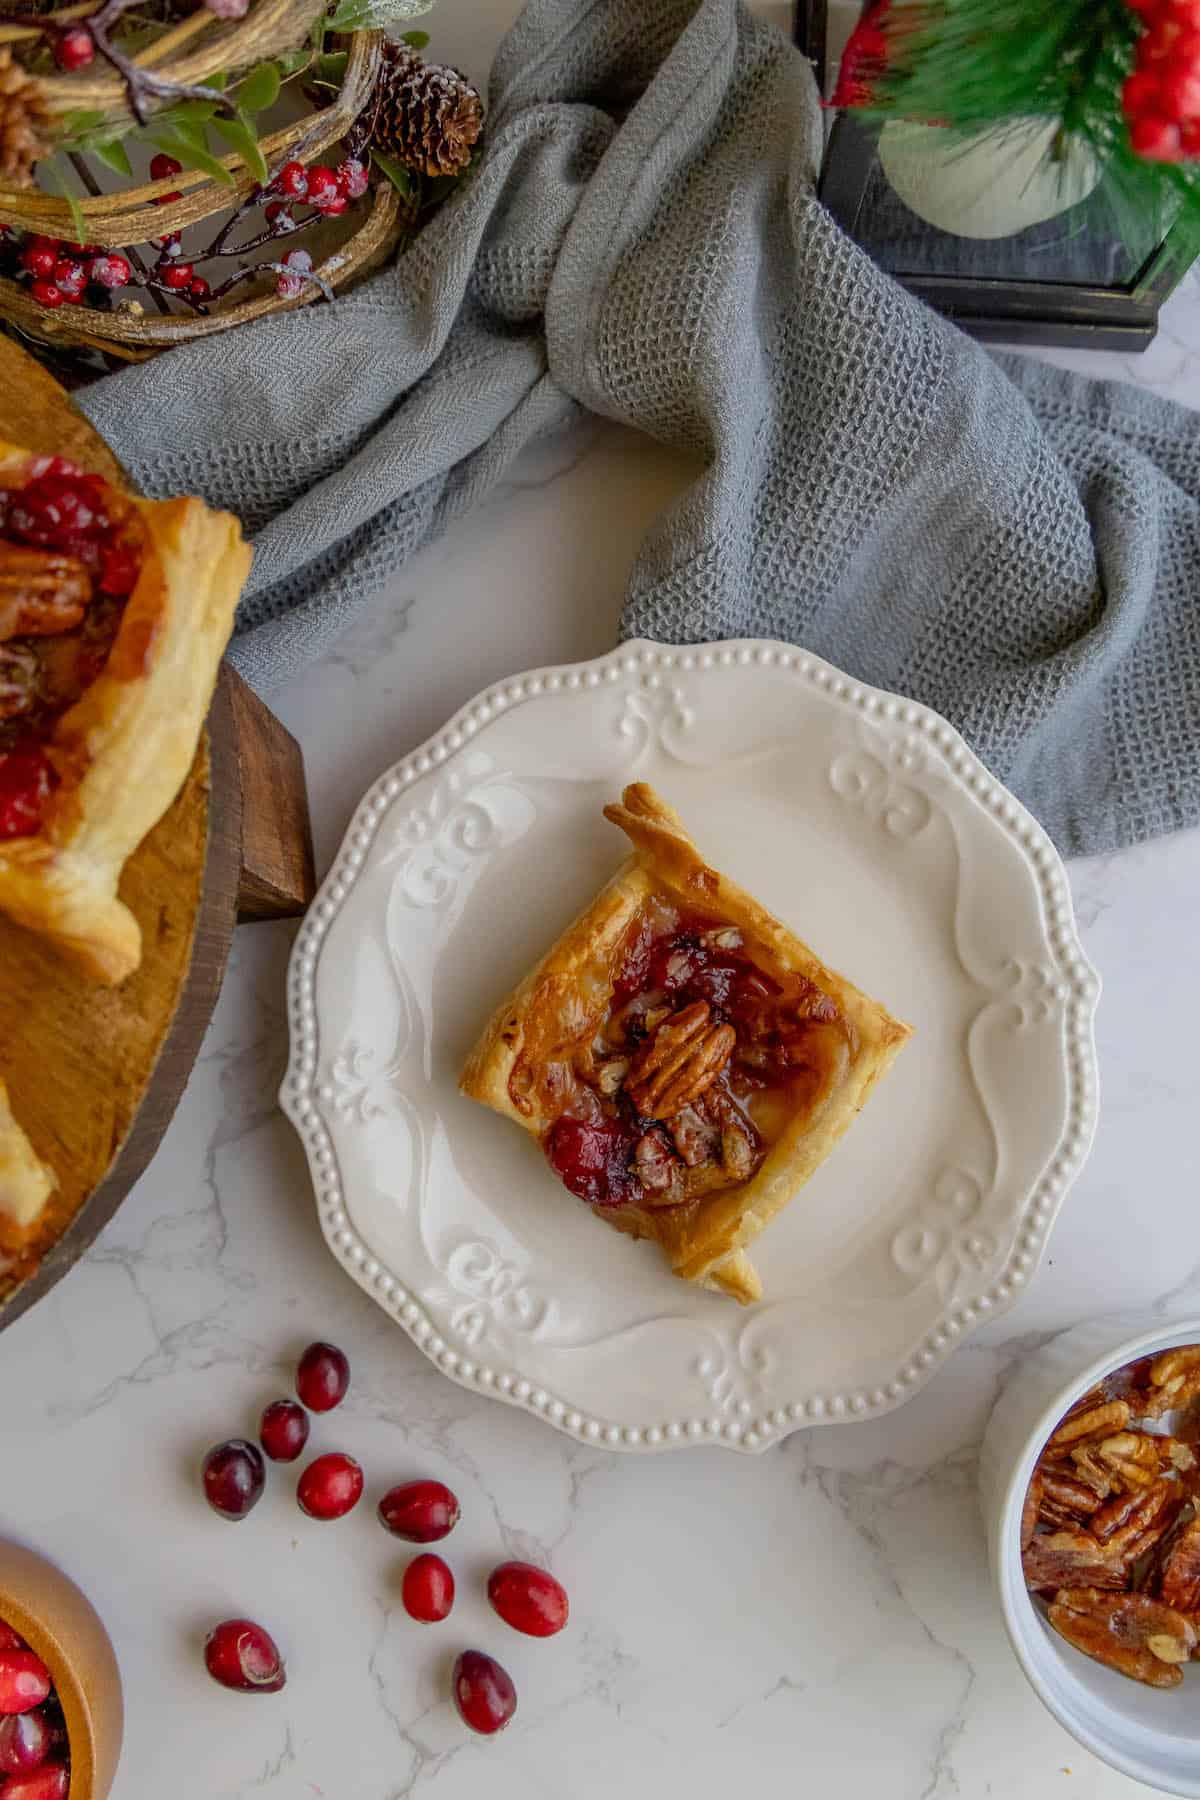 Cranberry brie bites with cranberries, pecans